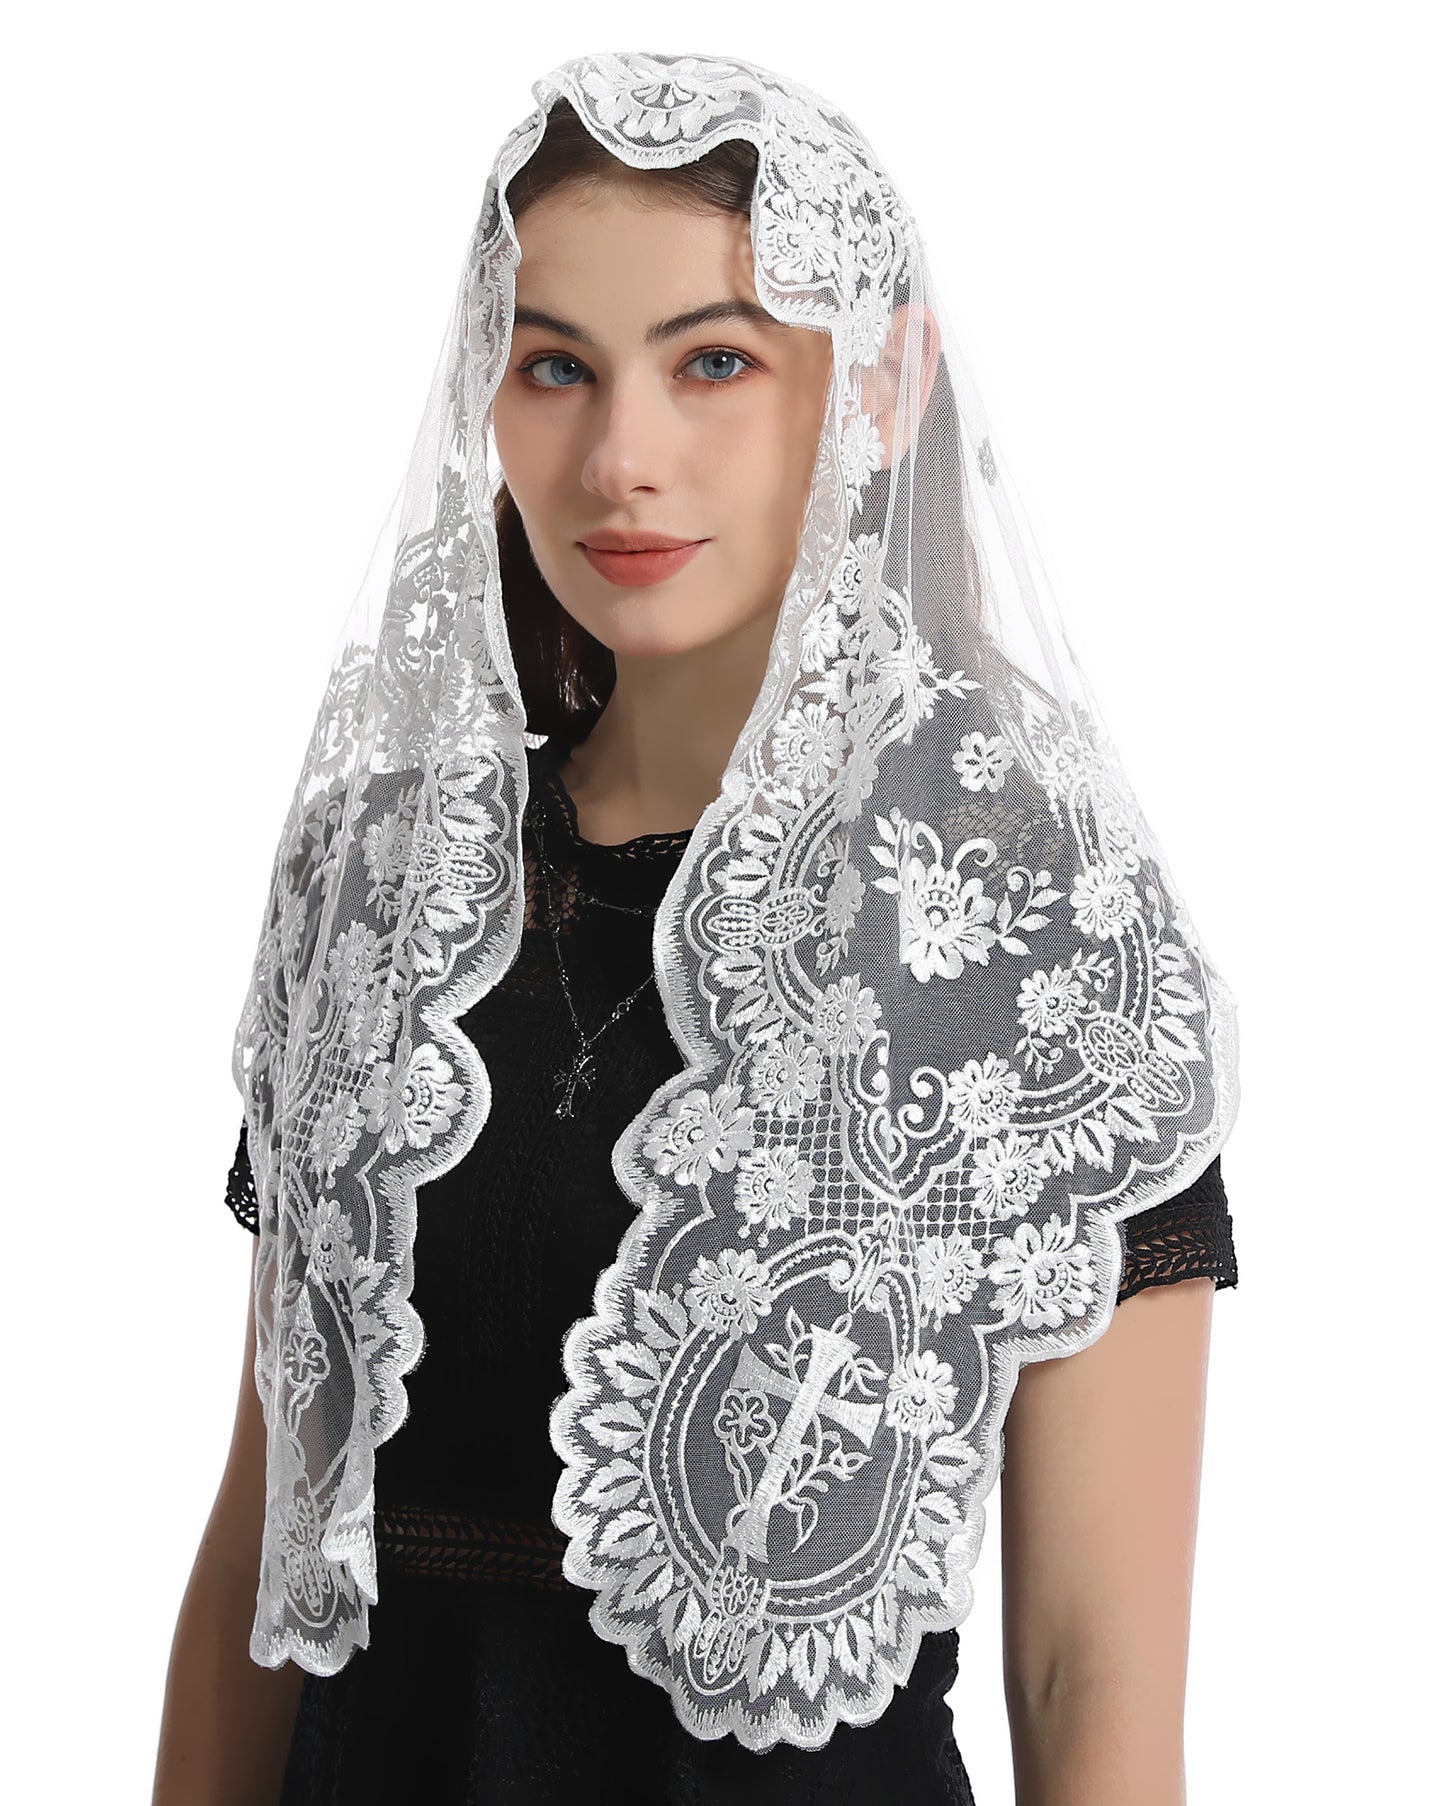 Bozidol Church Triangular Head covering - Cross Chalice Embroidered Vintage Church Veil for Women